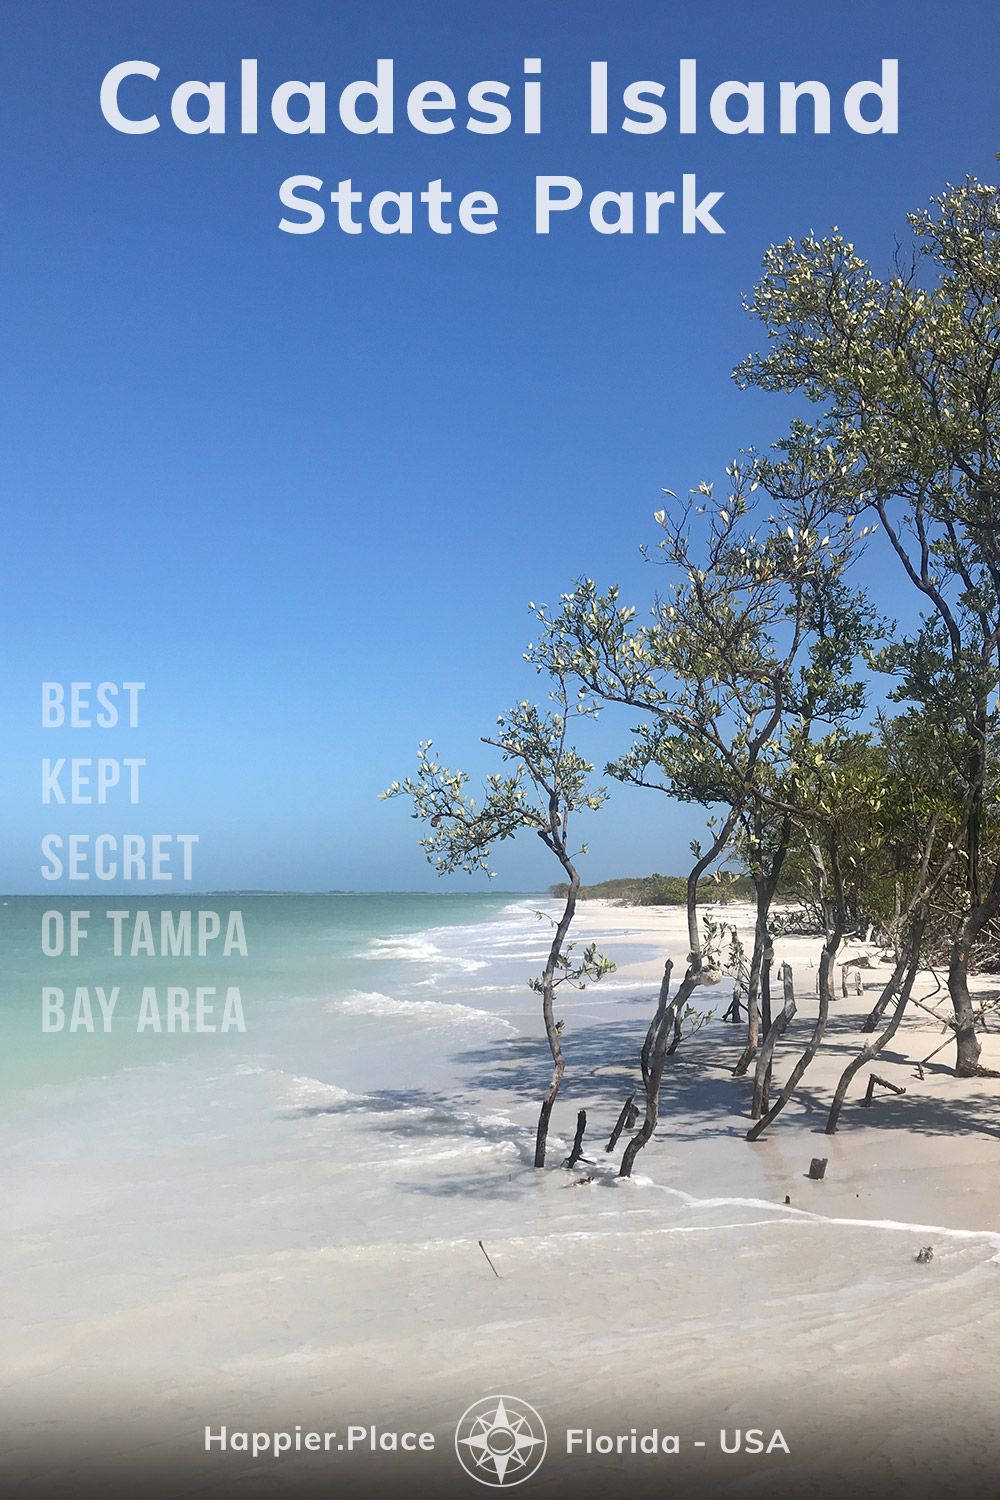 Caladesi Island State Park, Tampa Bay Area bäst bevarade hemlighet, orörd Gulf Coast Island